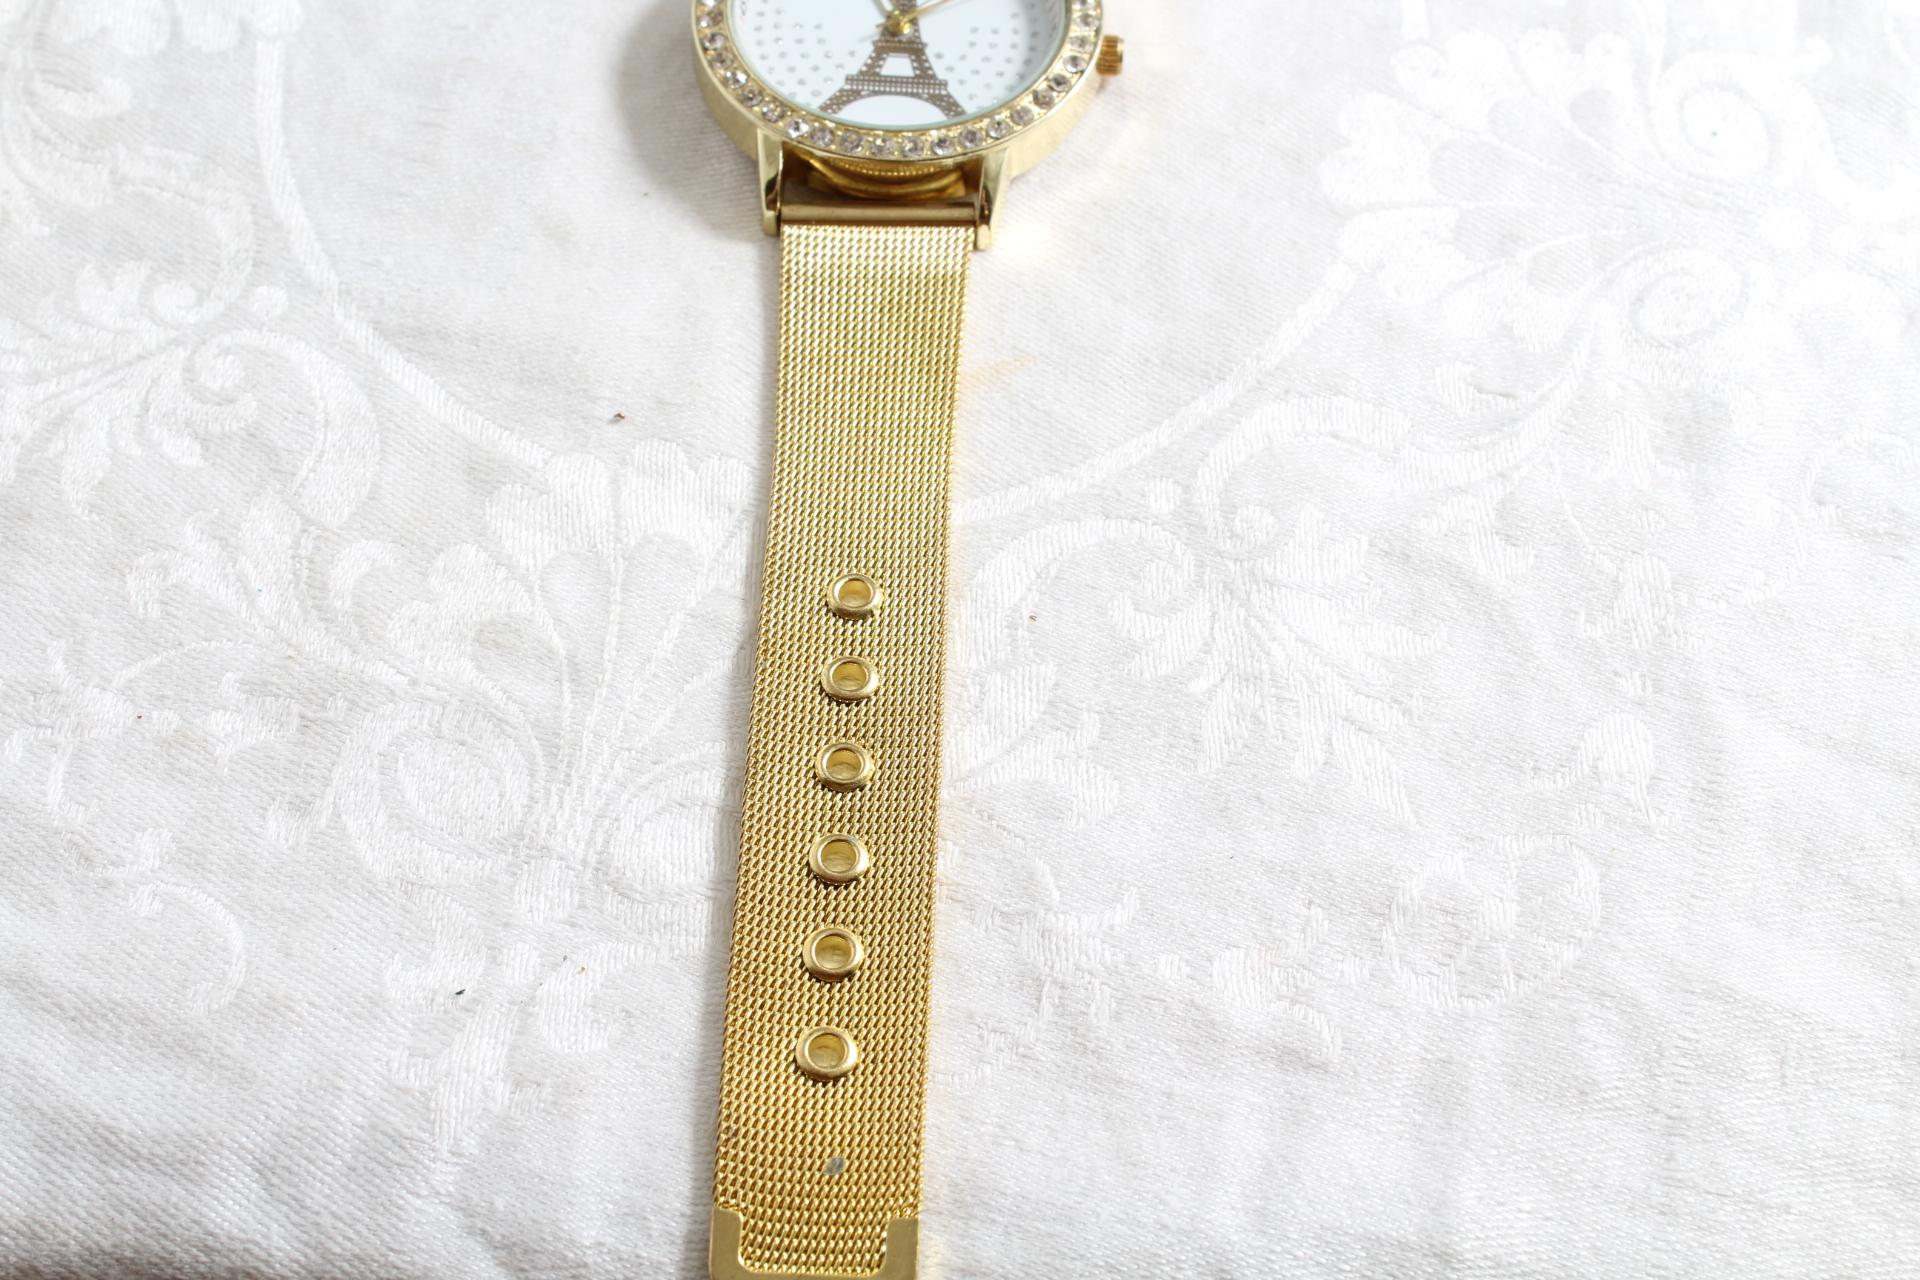 Souvenir Eiffel Tower Wristwatch Gold Mesh Band Rhinestones in Working Condition